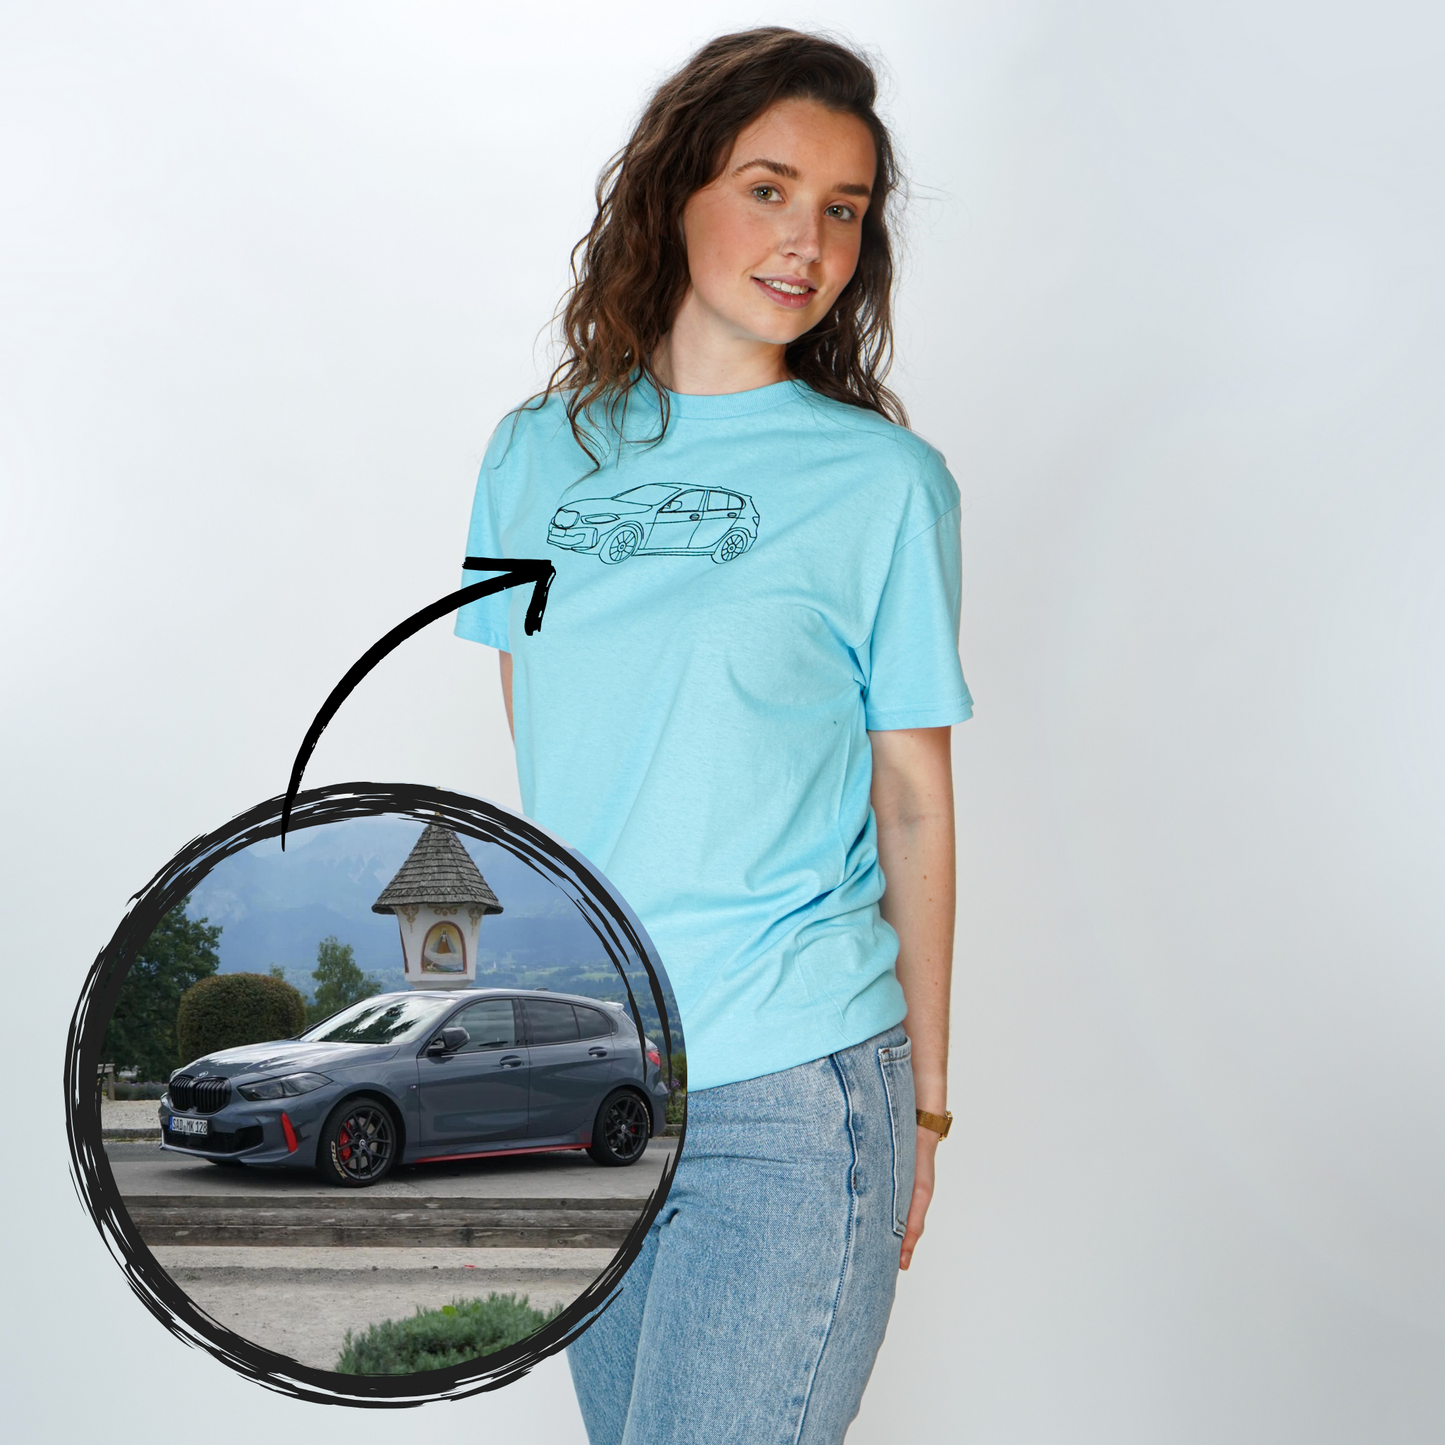 Apperal | T-shirts - Custom Car Line Drawing Printed